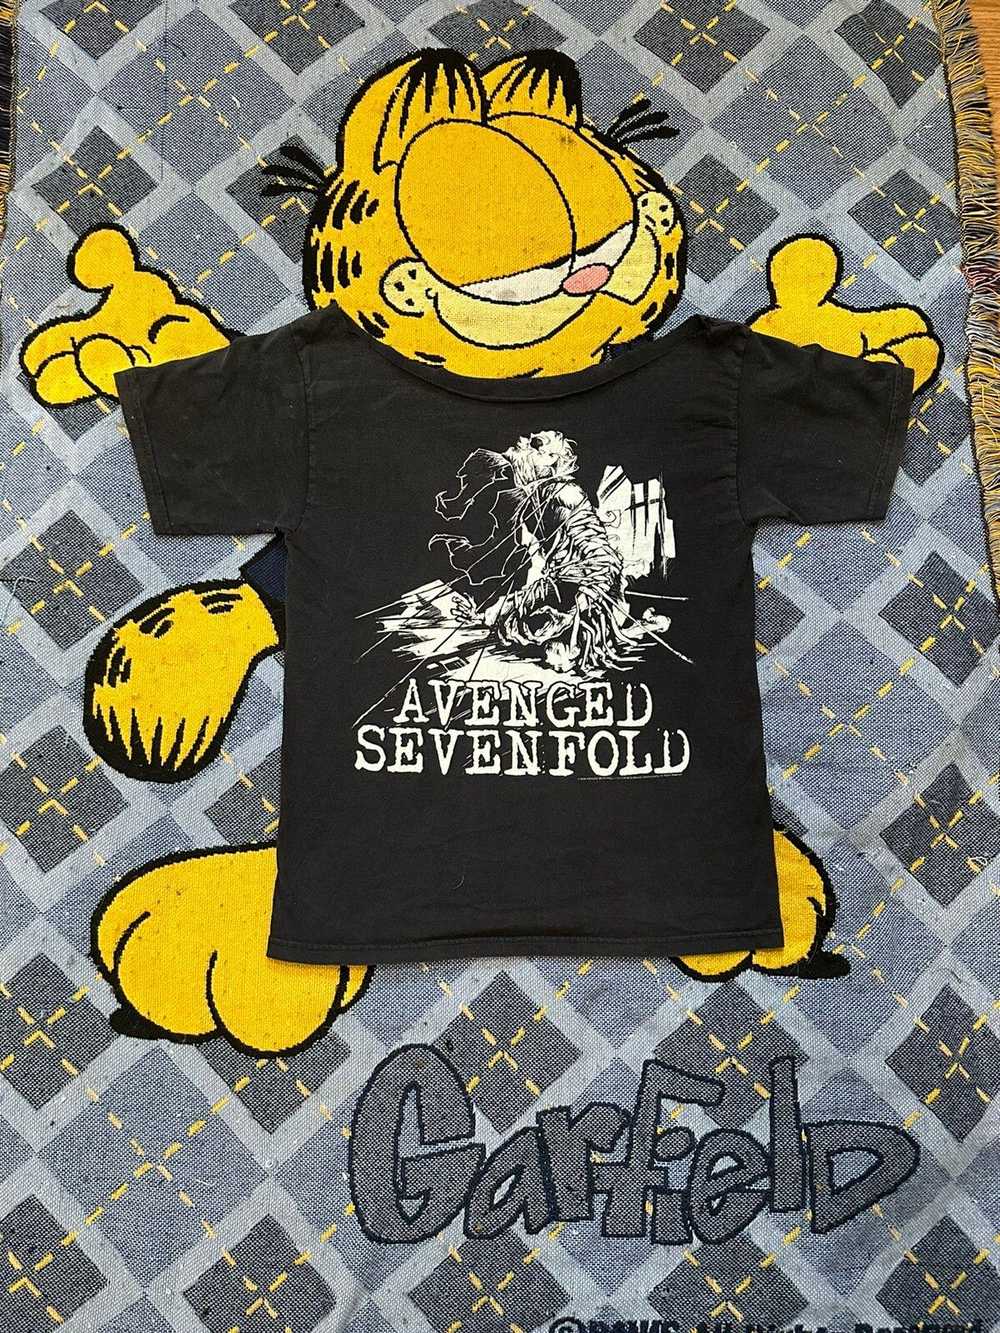 Band Tees × Rock Band × Rock T Shirt Vintage Aven… - image 1